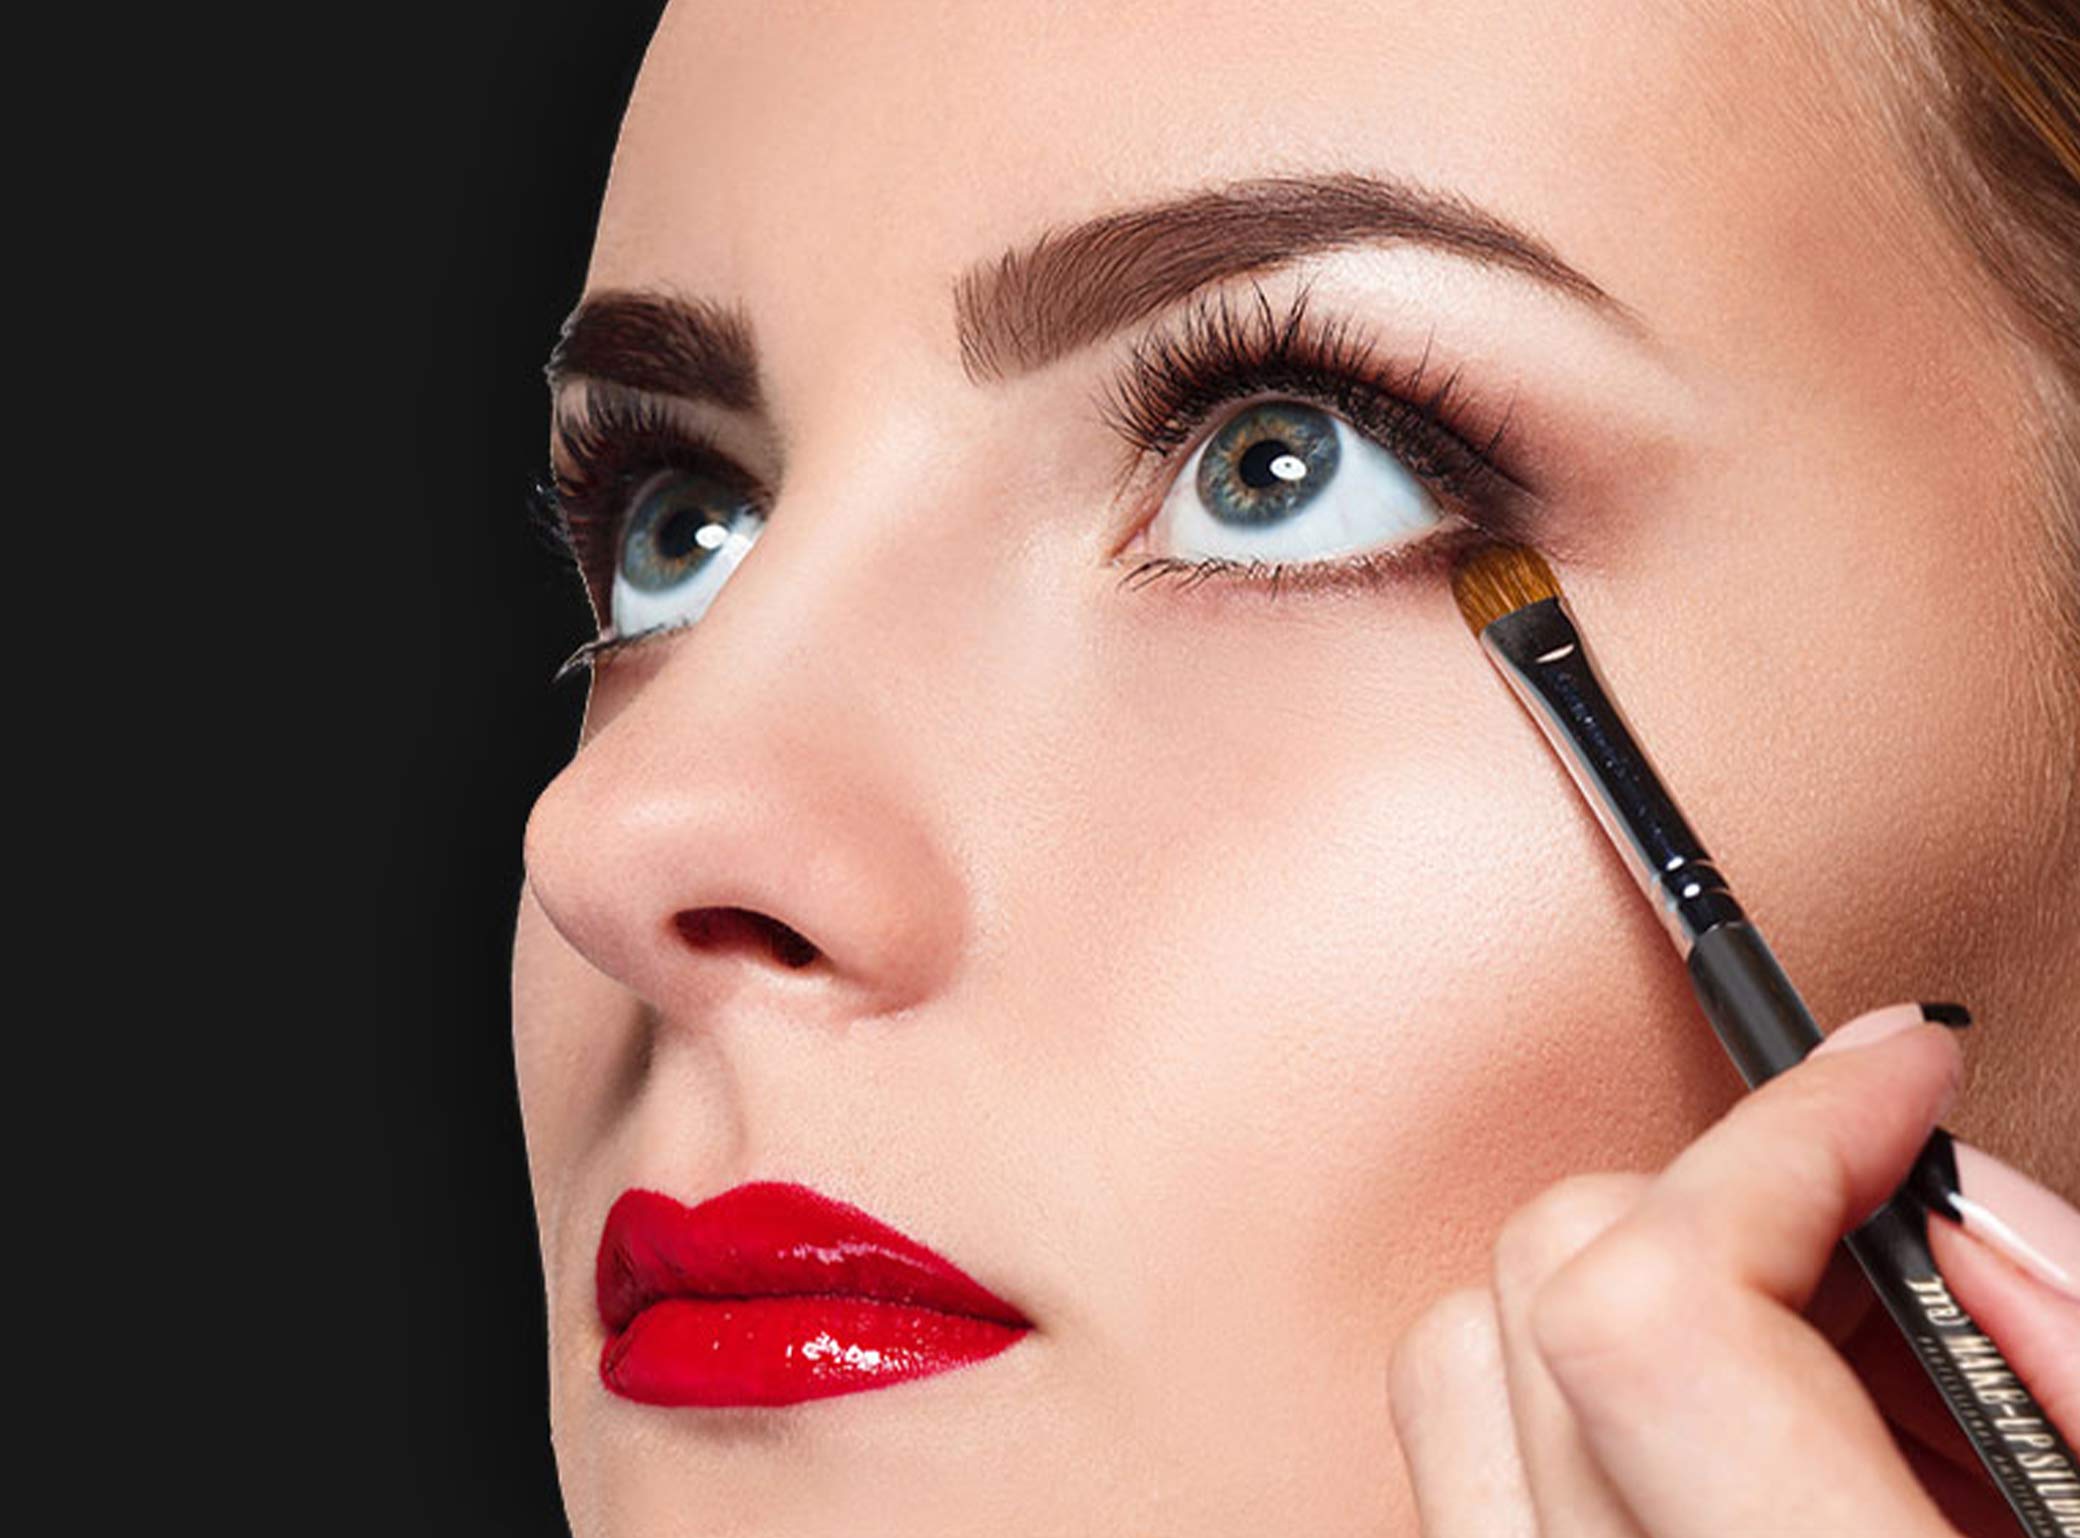 Types Of Eyeshadow Brushes: You Need For Eye-Makeup